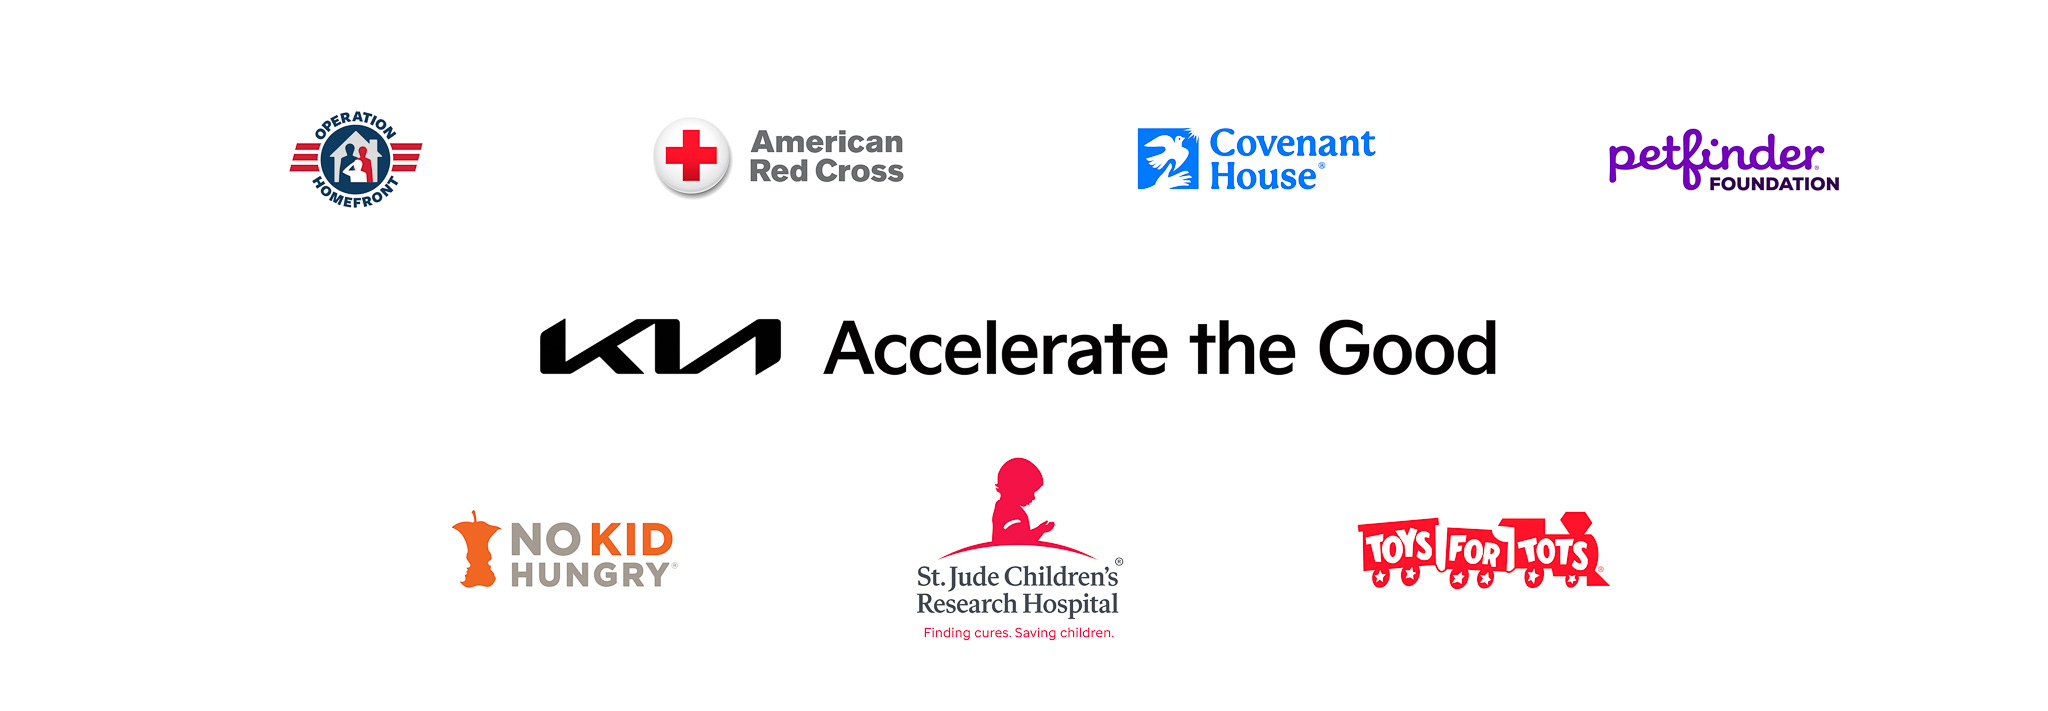 KIA的「Accelerate the Good」经销商匹配计划为全国非营利组织筹集了 377.9 万美元